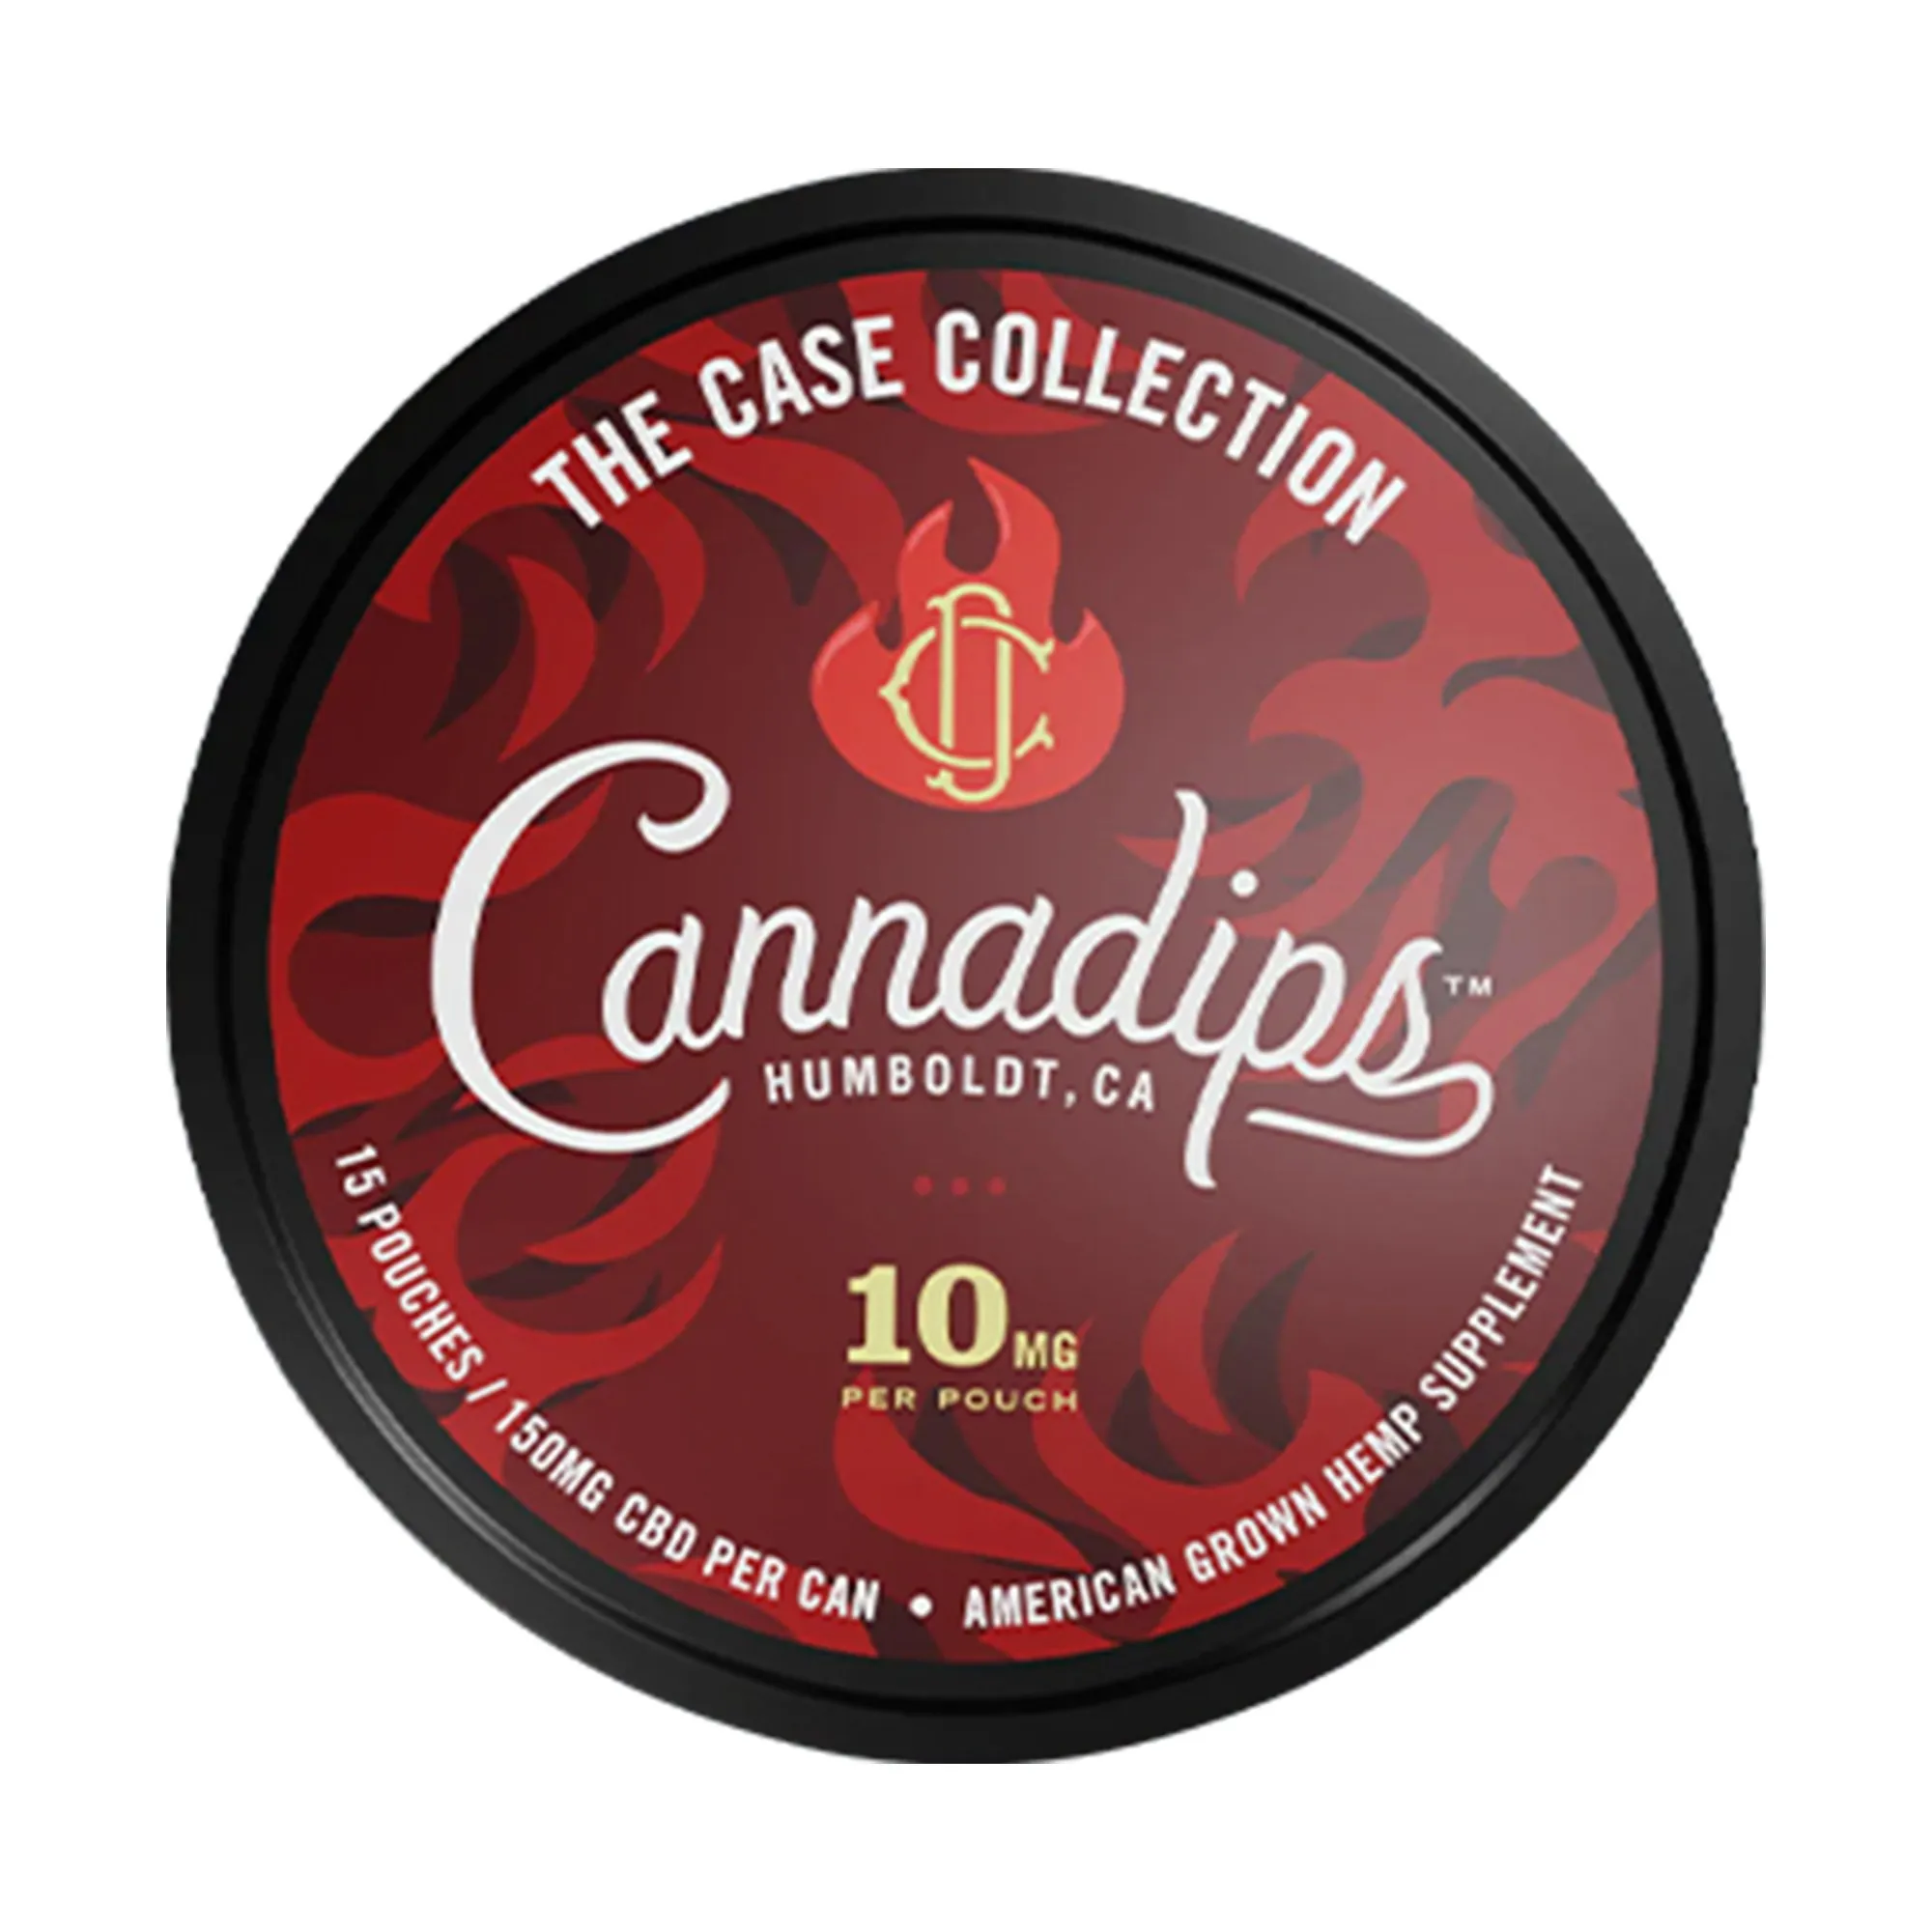 Cannadips Cinnamon Hots - Limited Edition